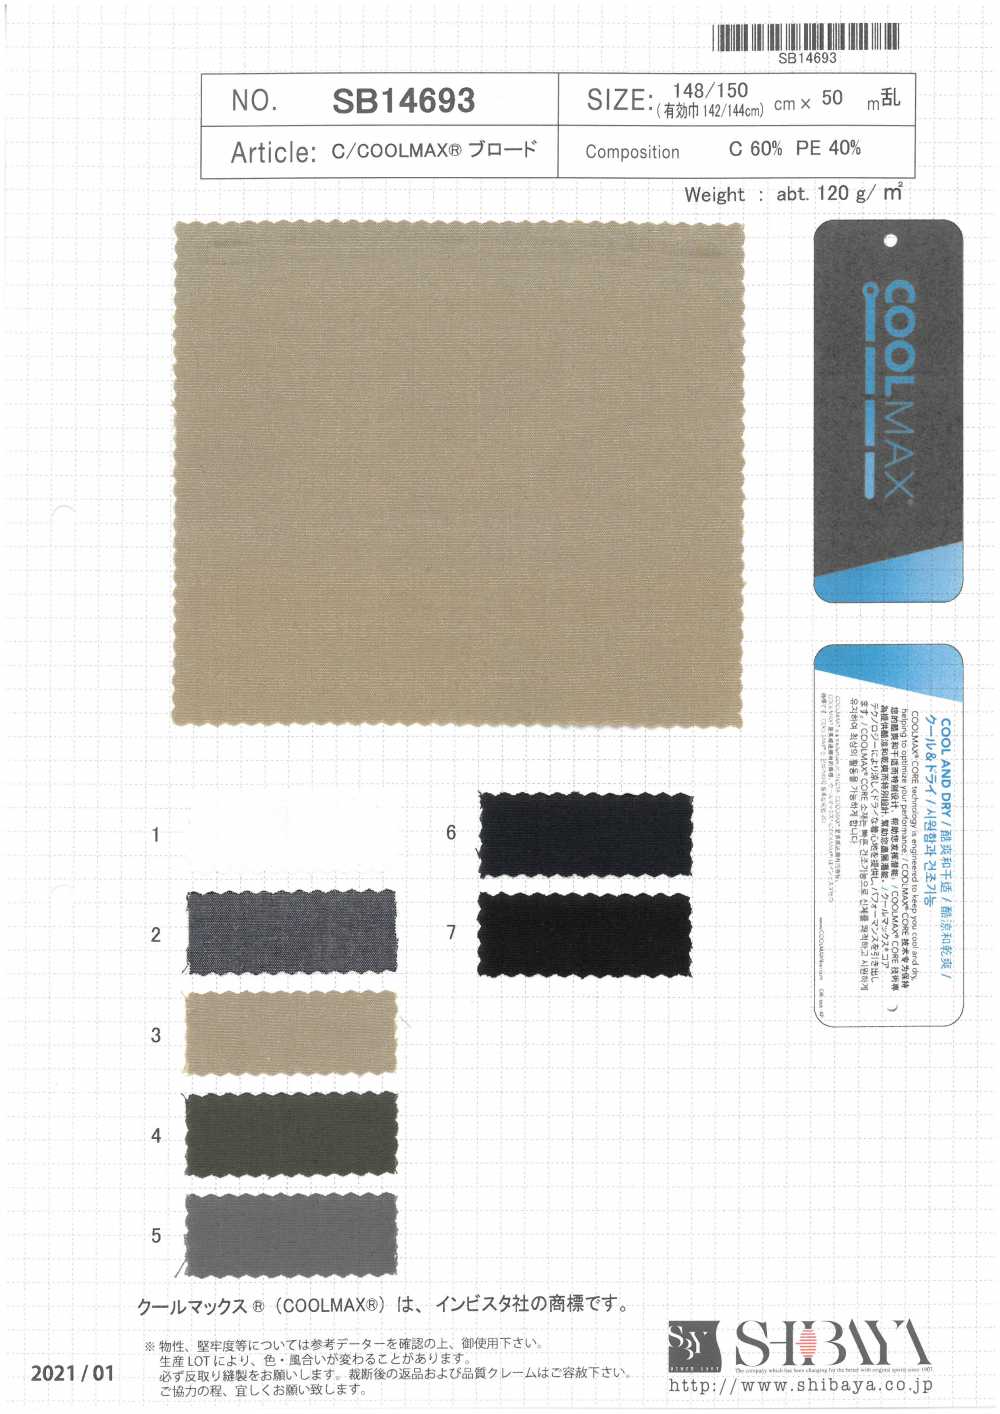 SB14693 C / COOLMAX Broadcloth[Textile / Fabric] SHIBAYA